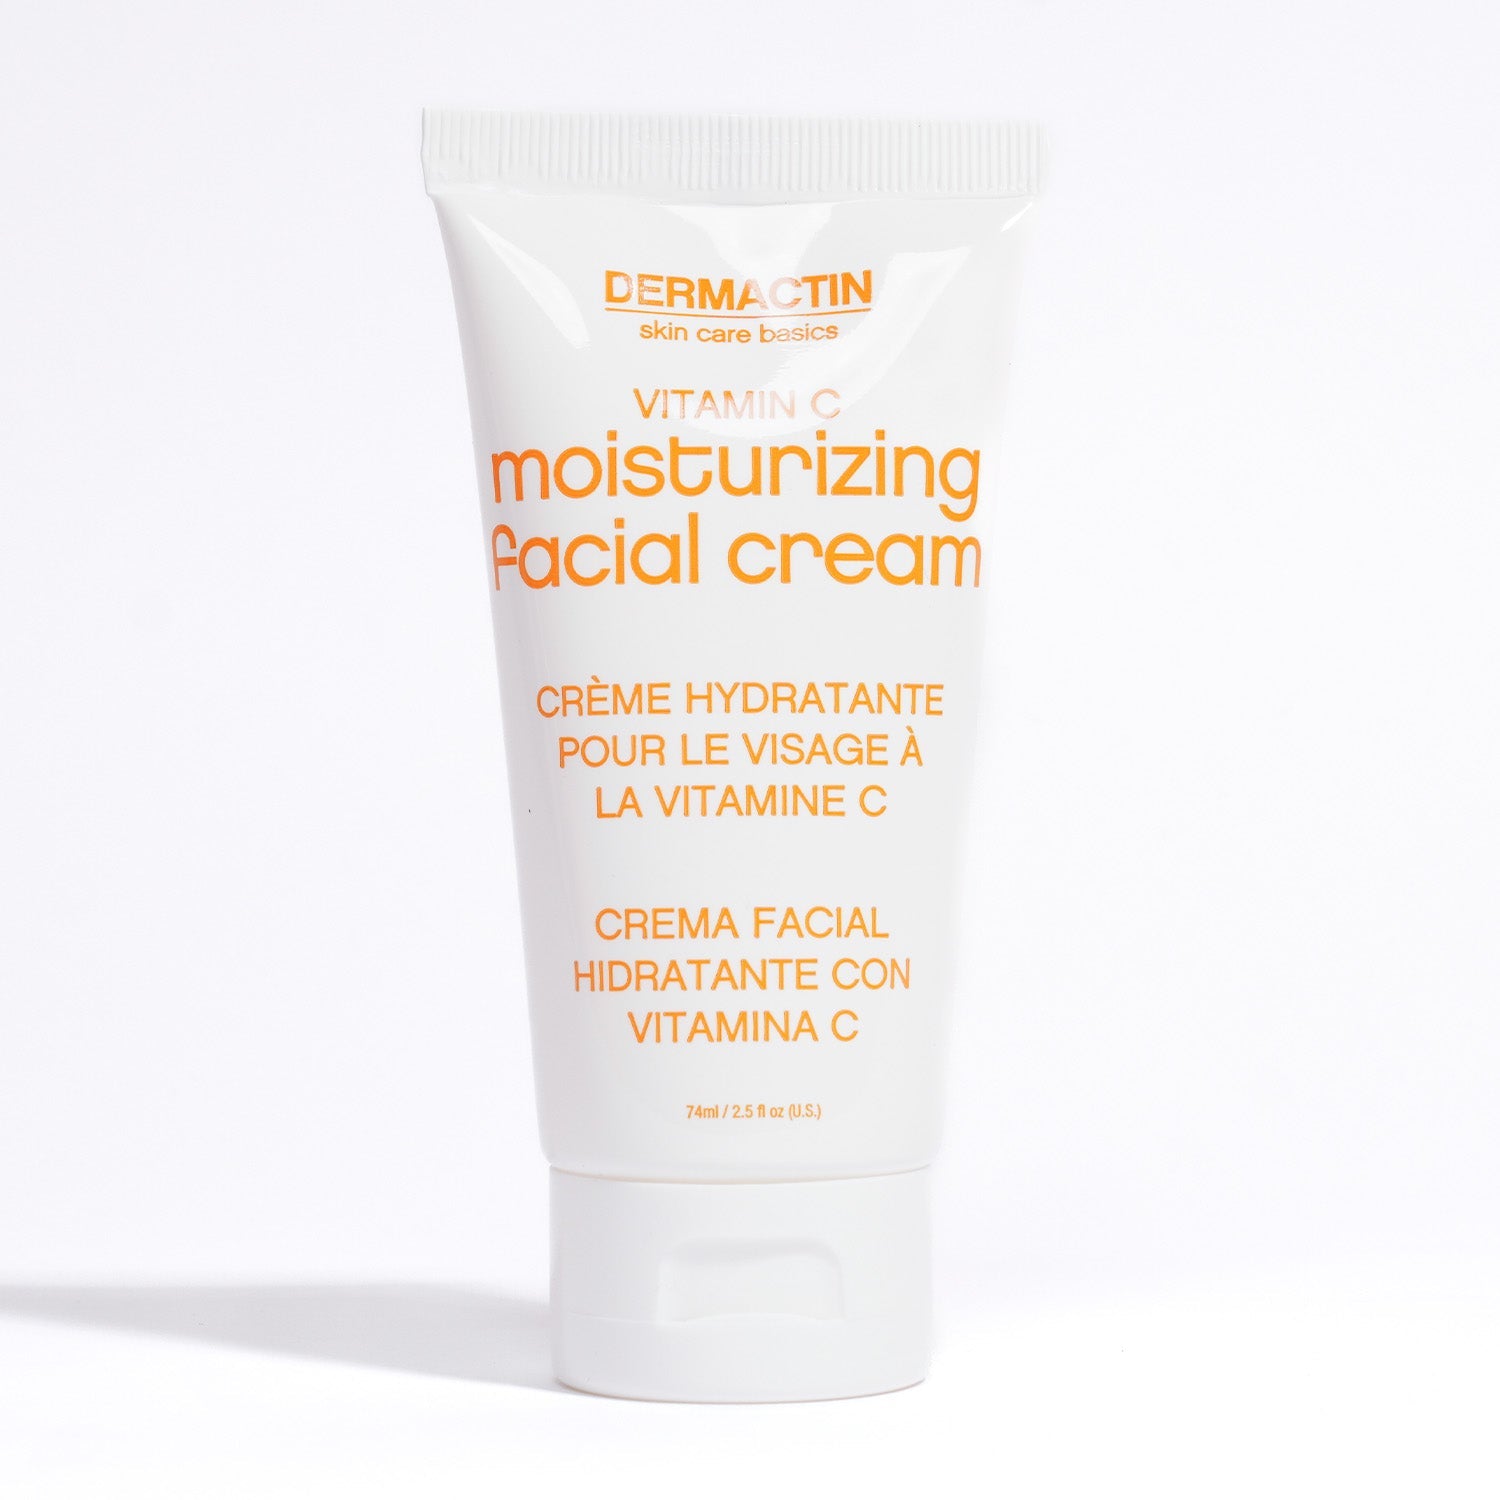 Dermactin Brightening Vitamin C Moisturizing Facial Cream 2.5oz/ 74ml